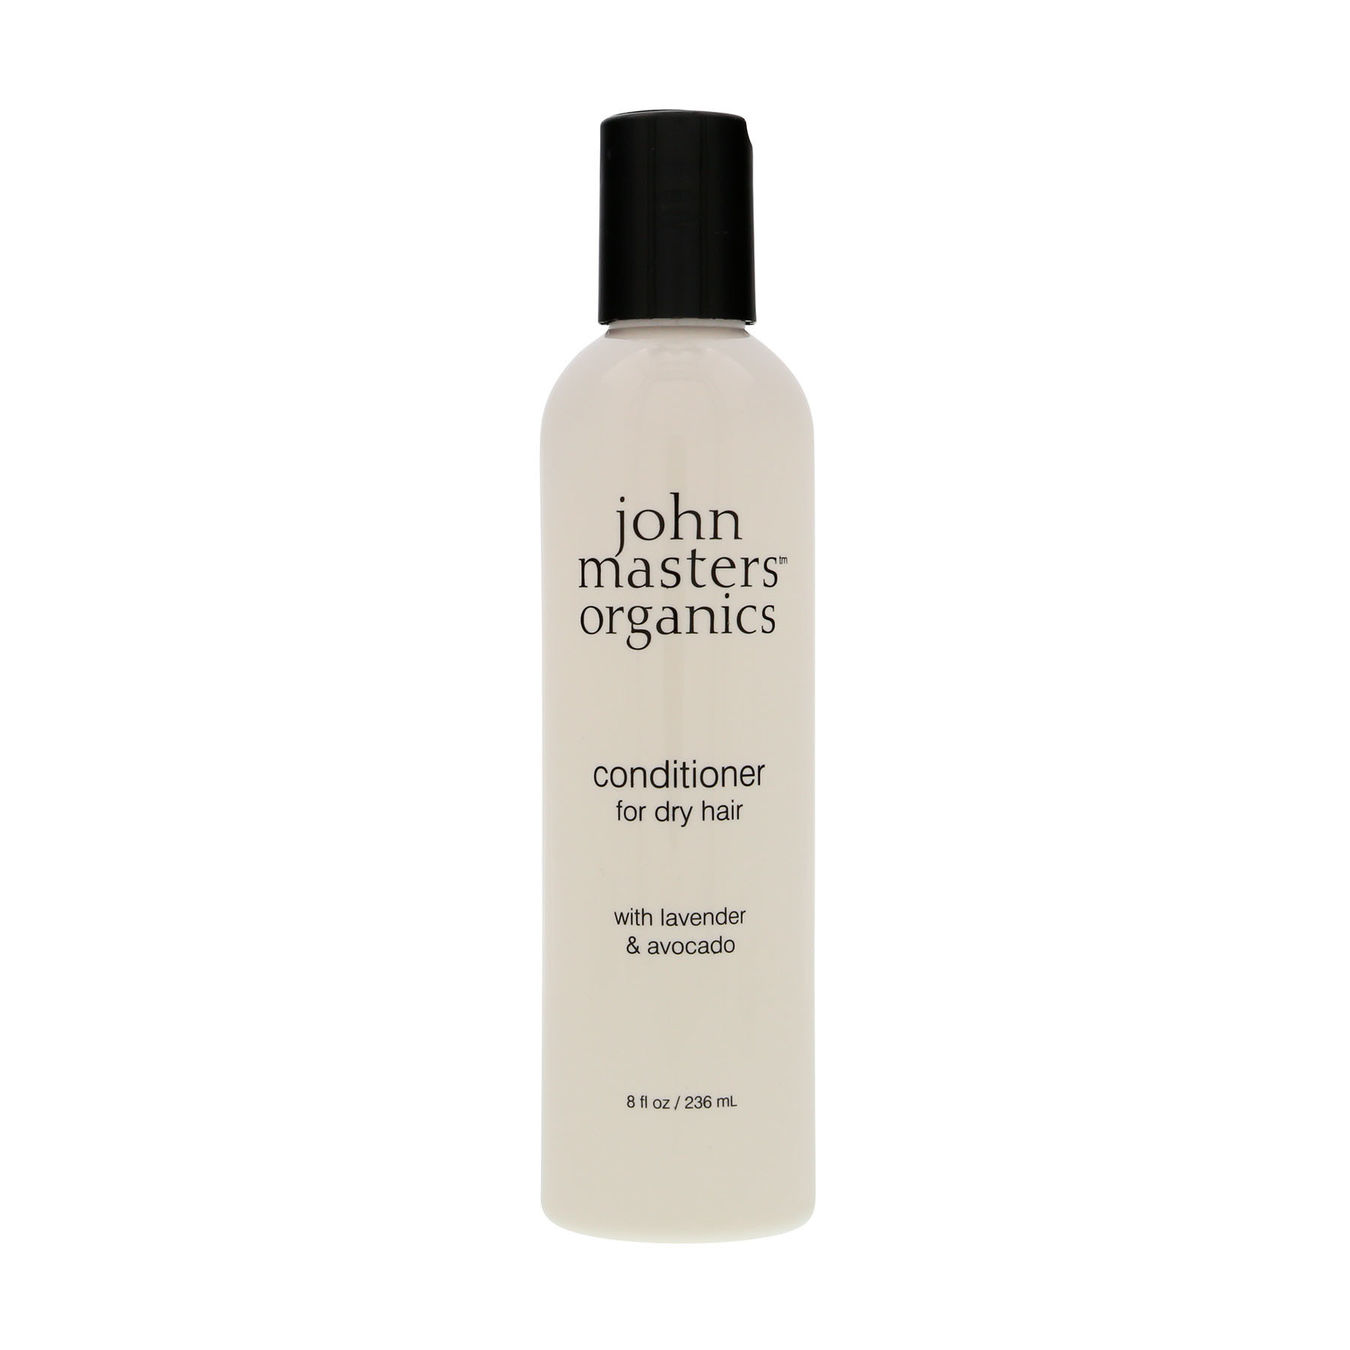 john masters organics lavender & avocado Conditioner for dry hair